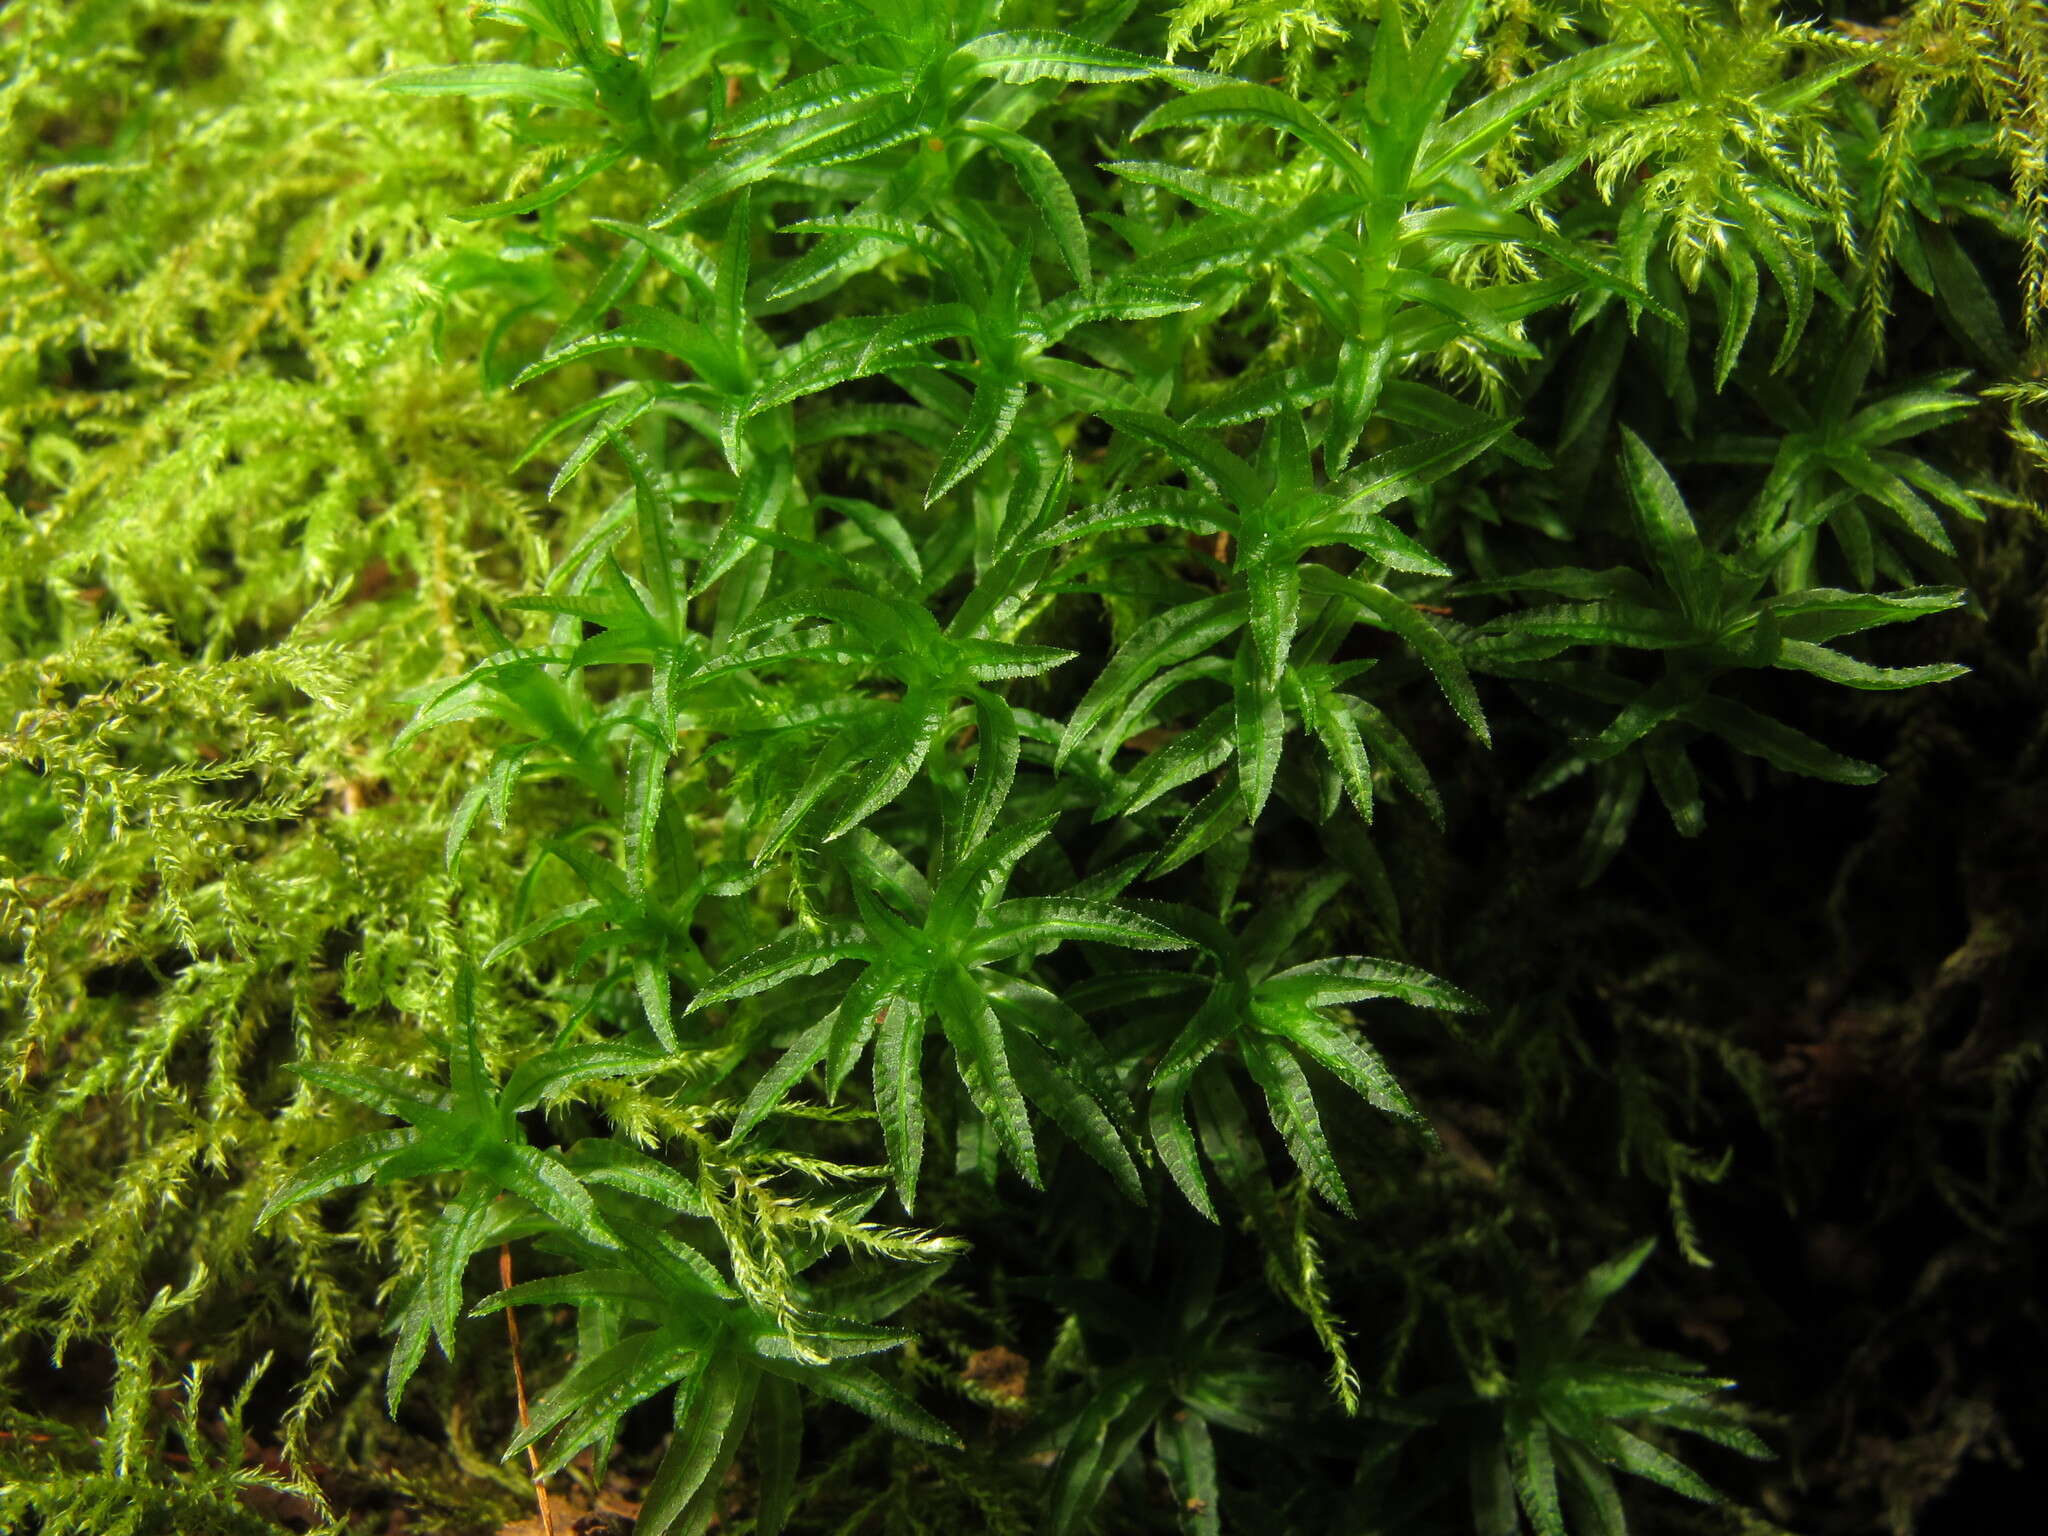 Image of undulate atrichum moss